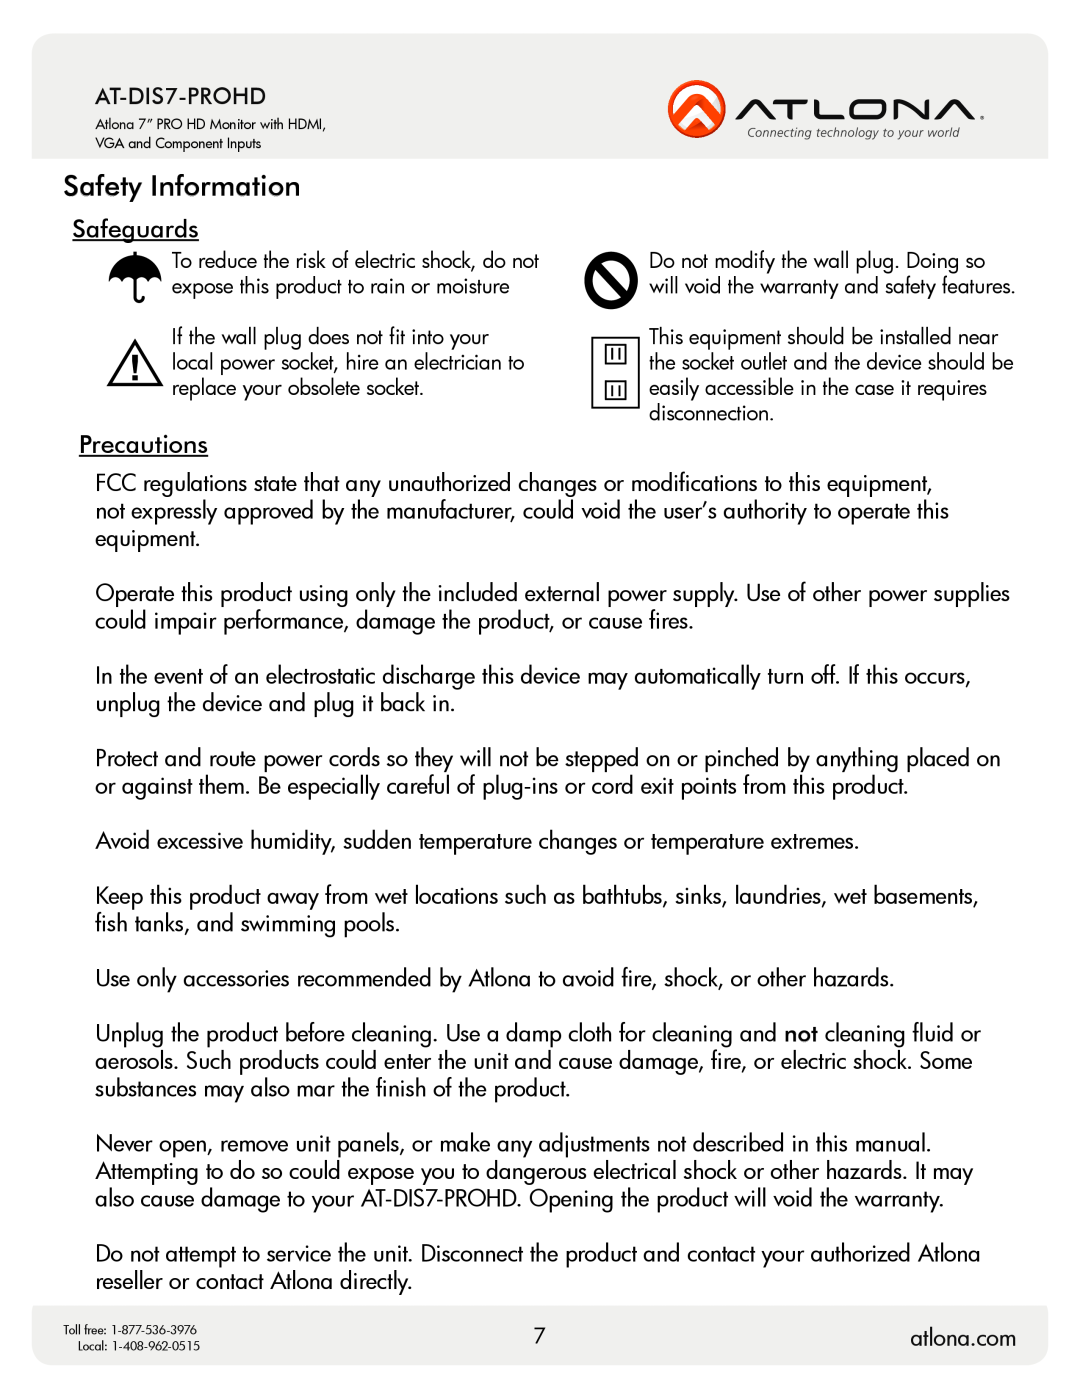 Atlona AT-DIS7-PROHD user manual Safety Information, Safeguards, Precautions, atlona.com 